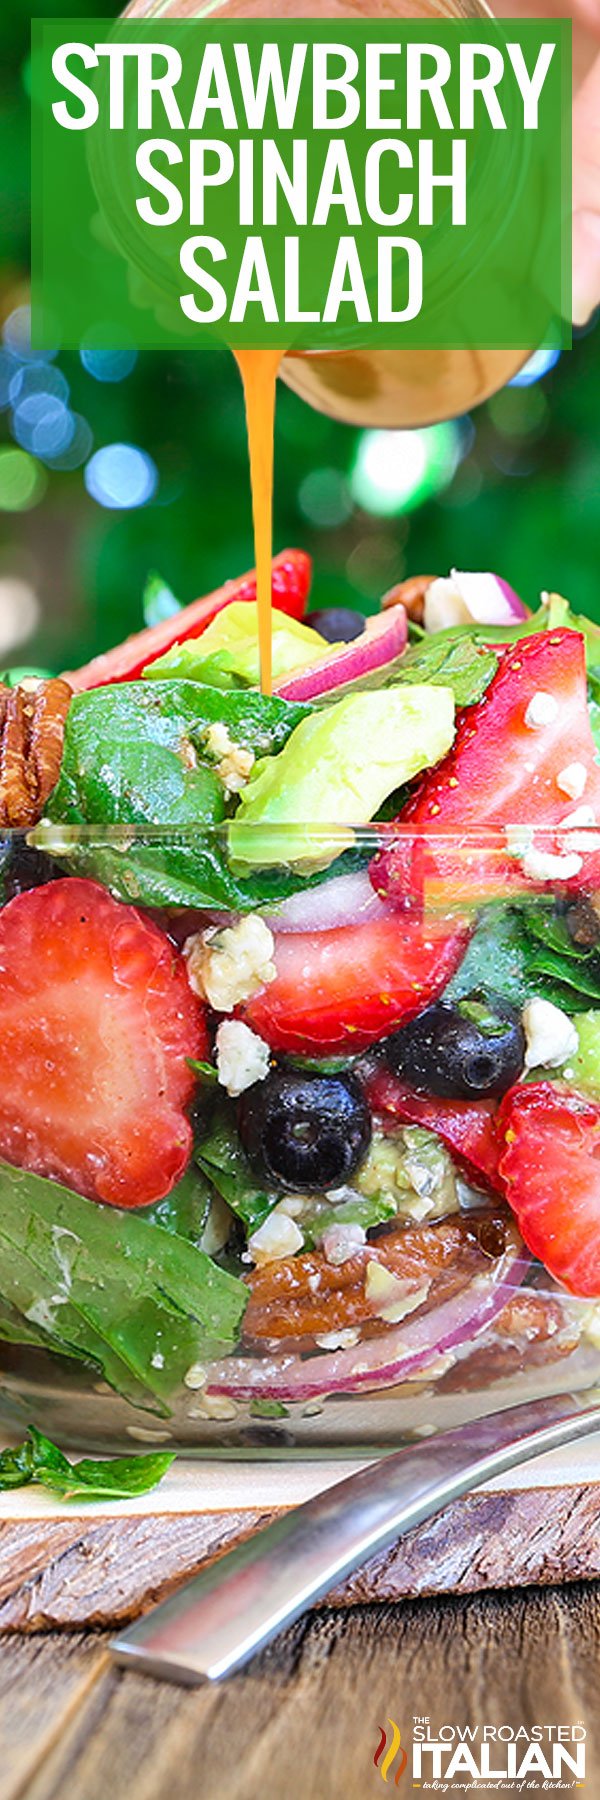 spinach strawberry salad closeup